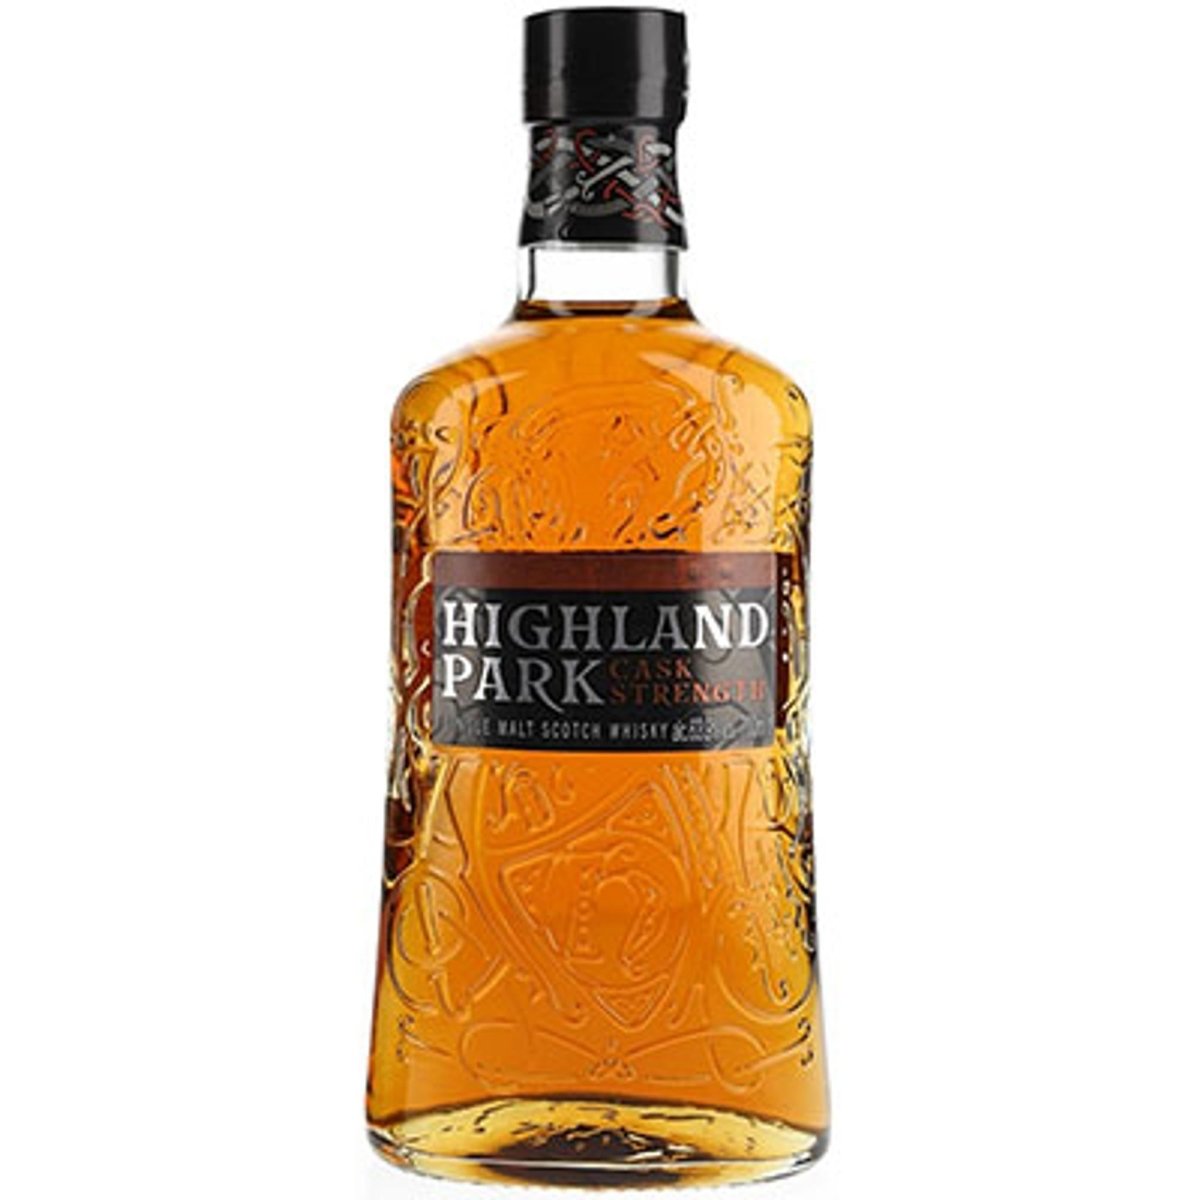 Highland Park - 'Cask Strength' Single Malt Scotch Whisky (750ML) - The Epicurean Trader